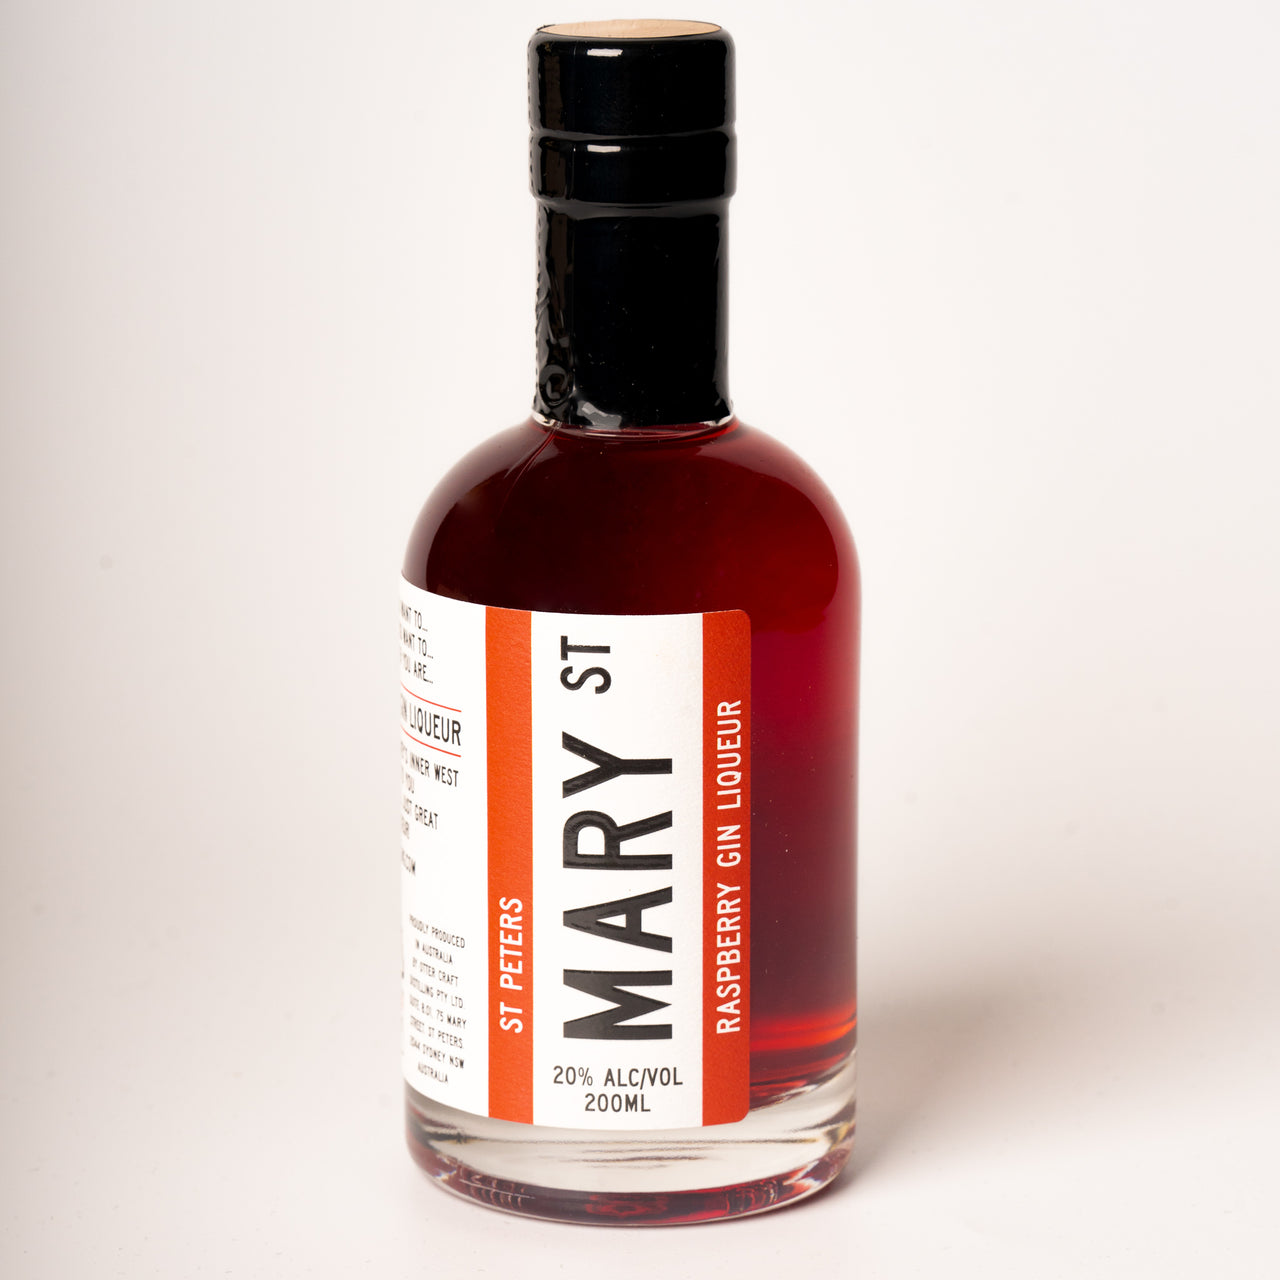 Mary St Raspberry Gin Liqueur